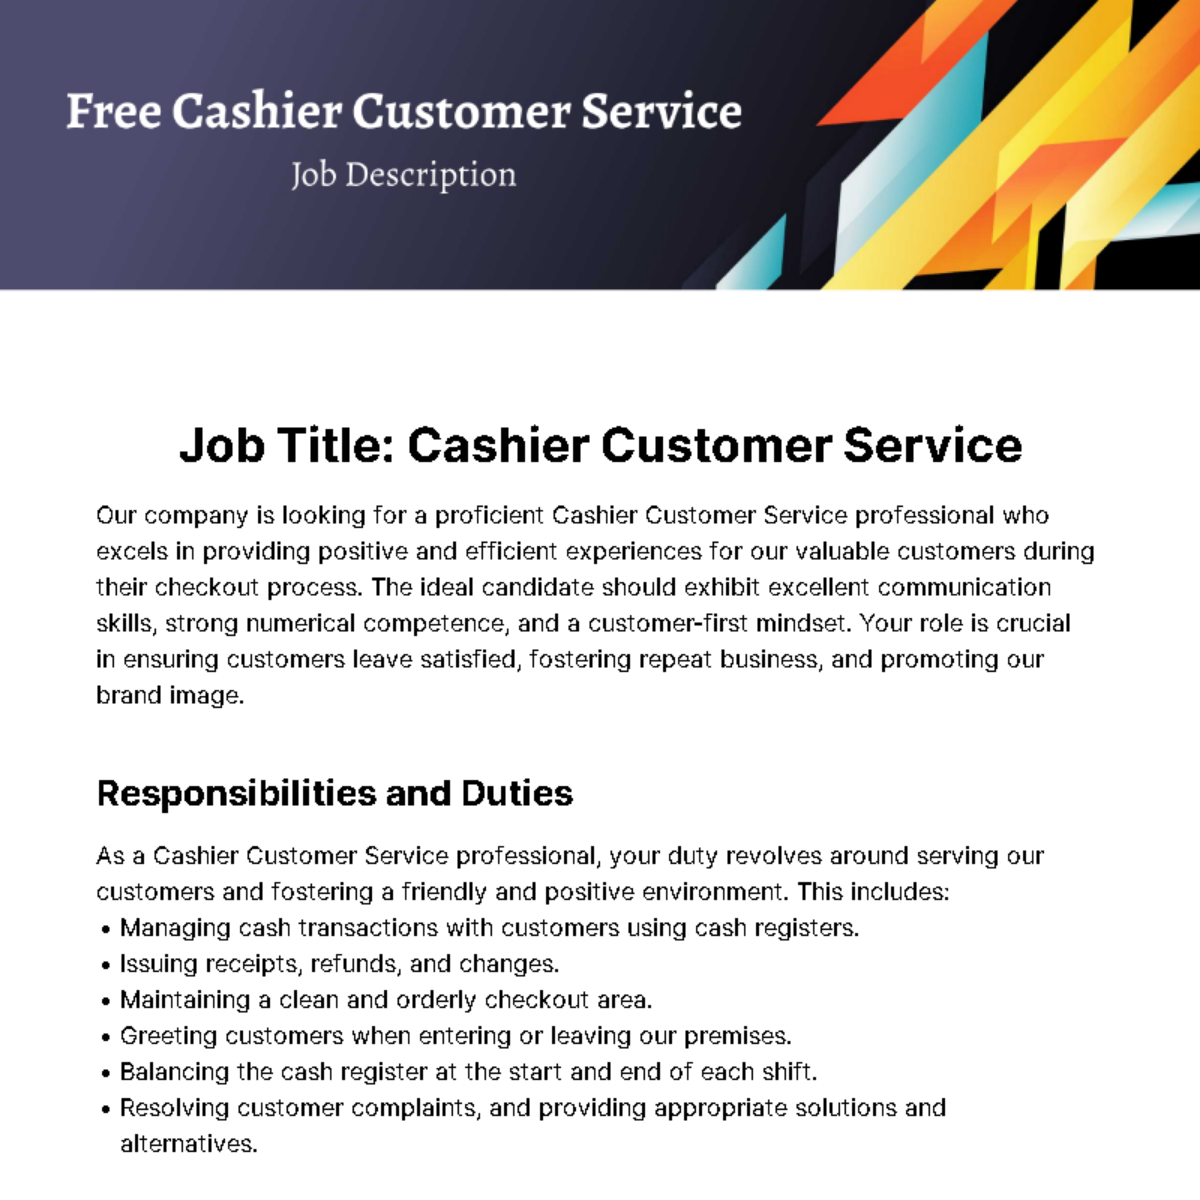 Free Cashier Customer Service Job Description Template